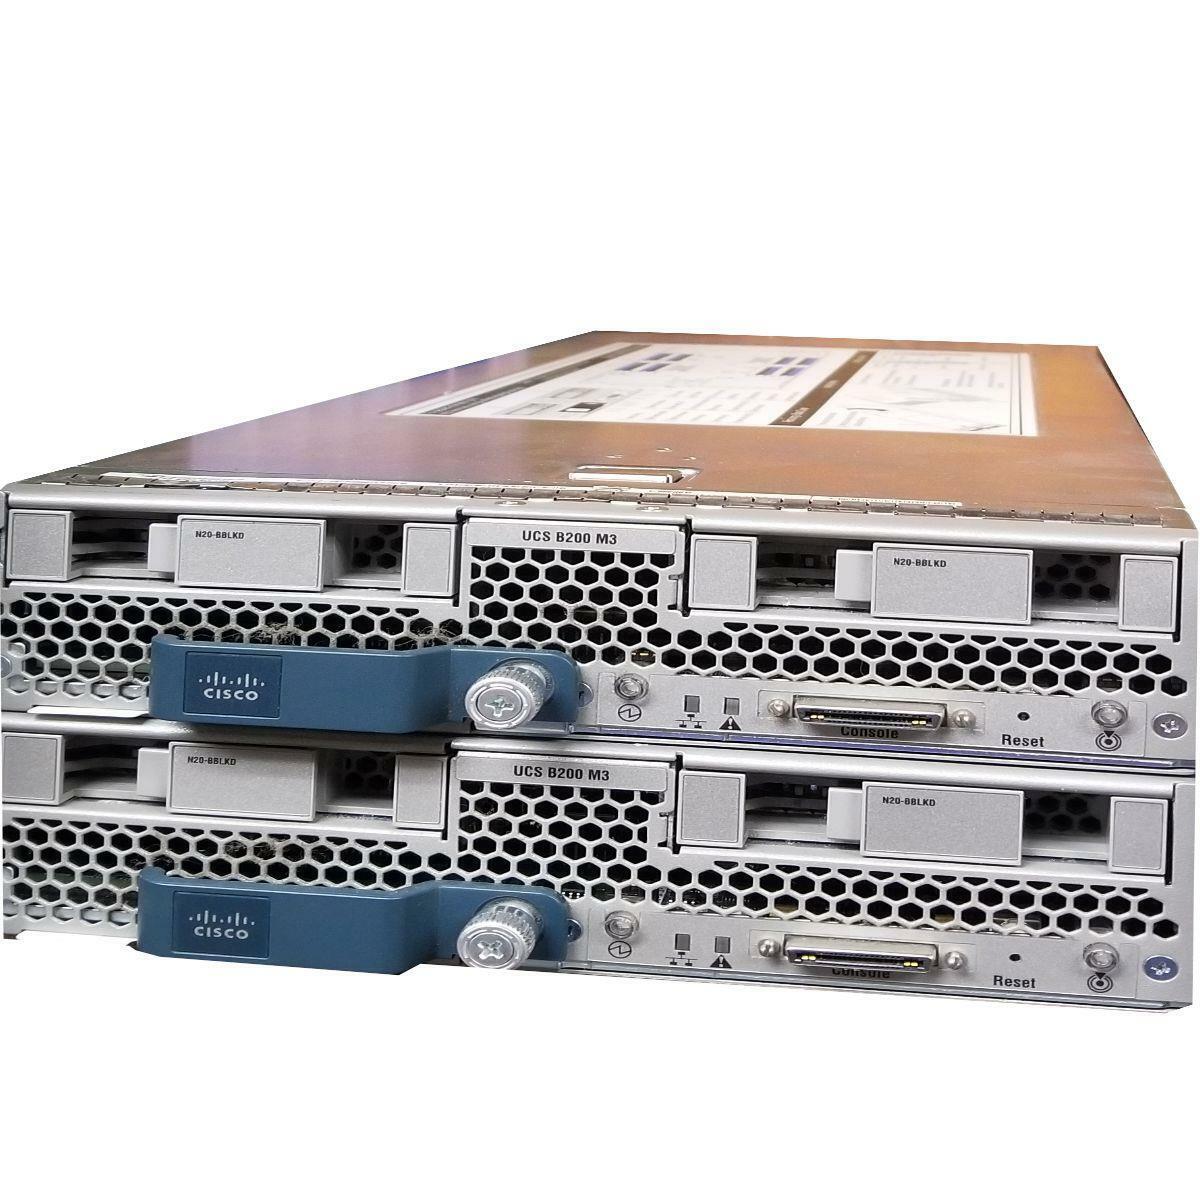 Cisco UCS B200 M3 V06 Blade Server Dual Xeon E5-2680 2.8GHz 256GB NO HDD